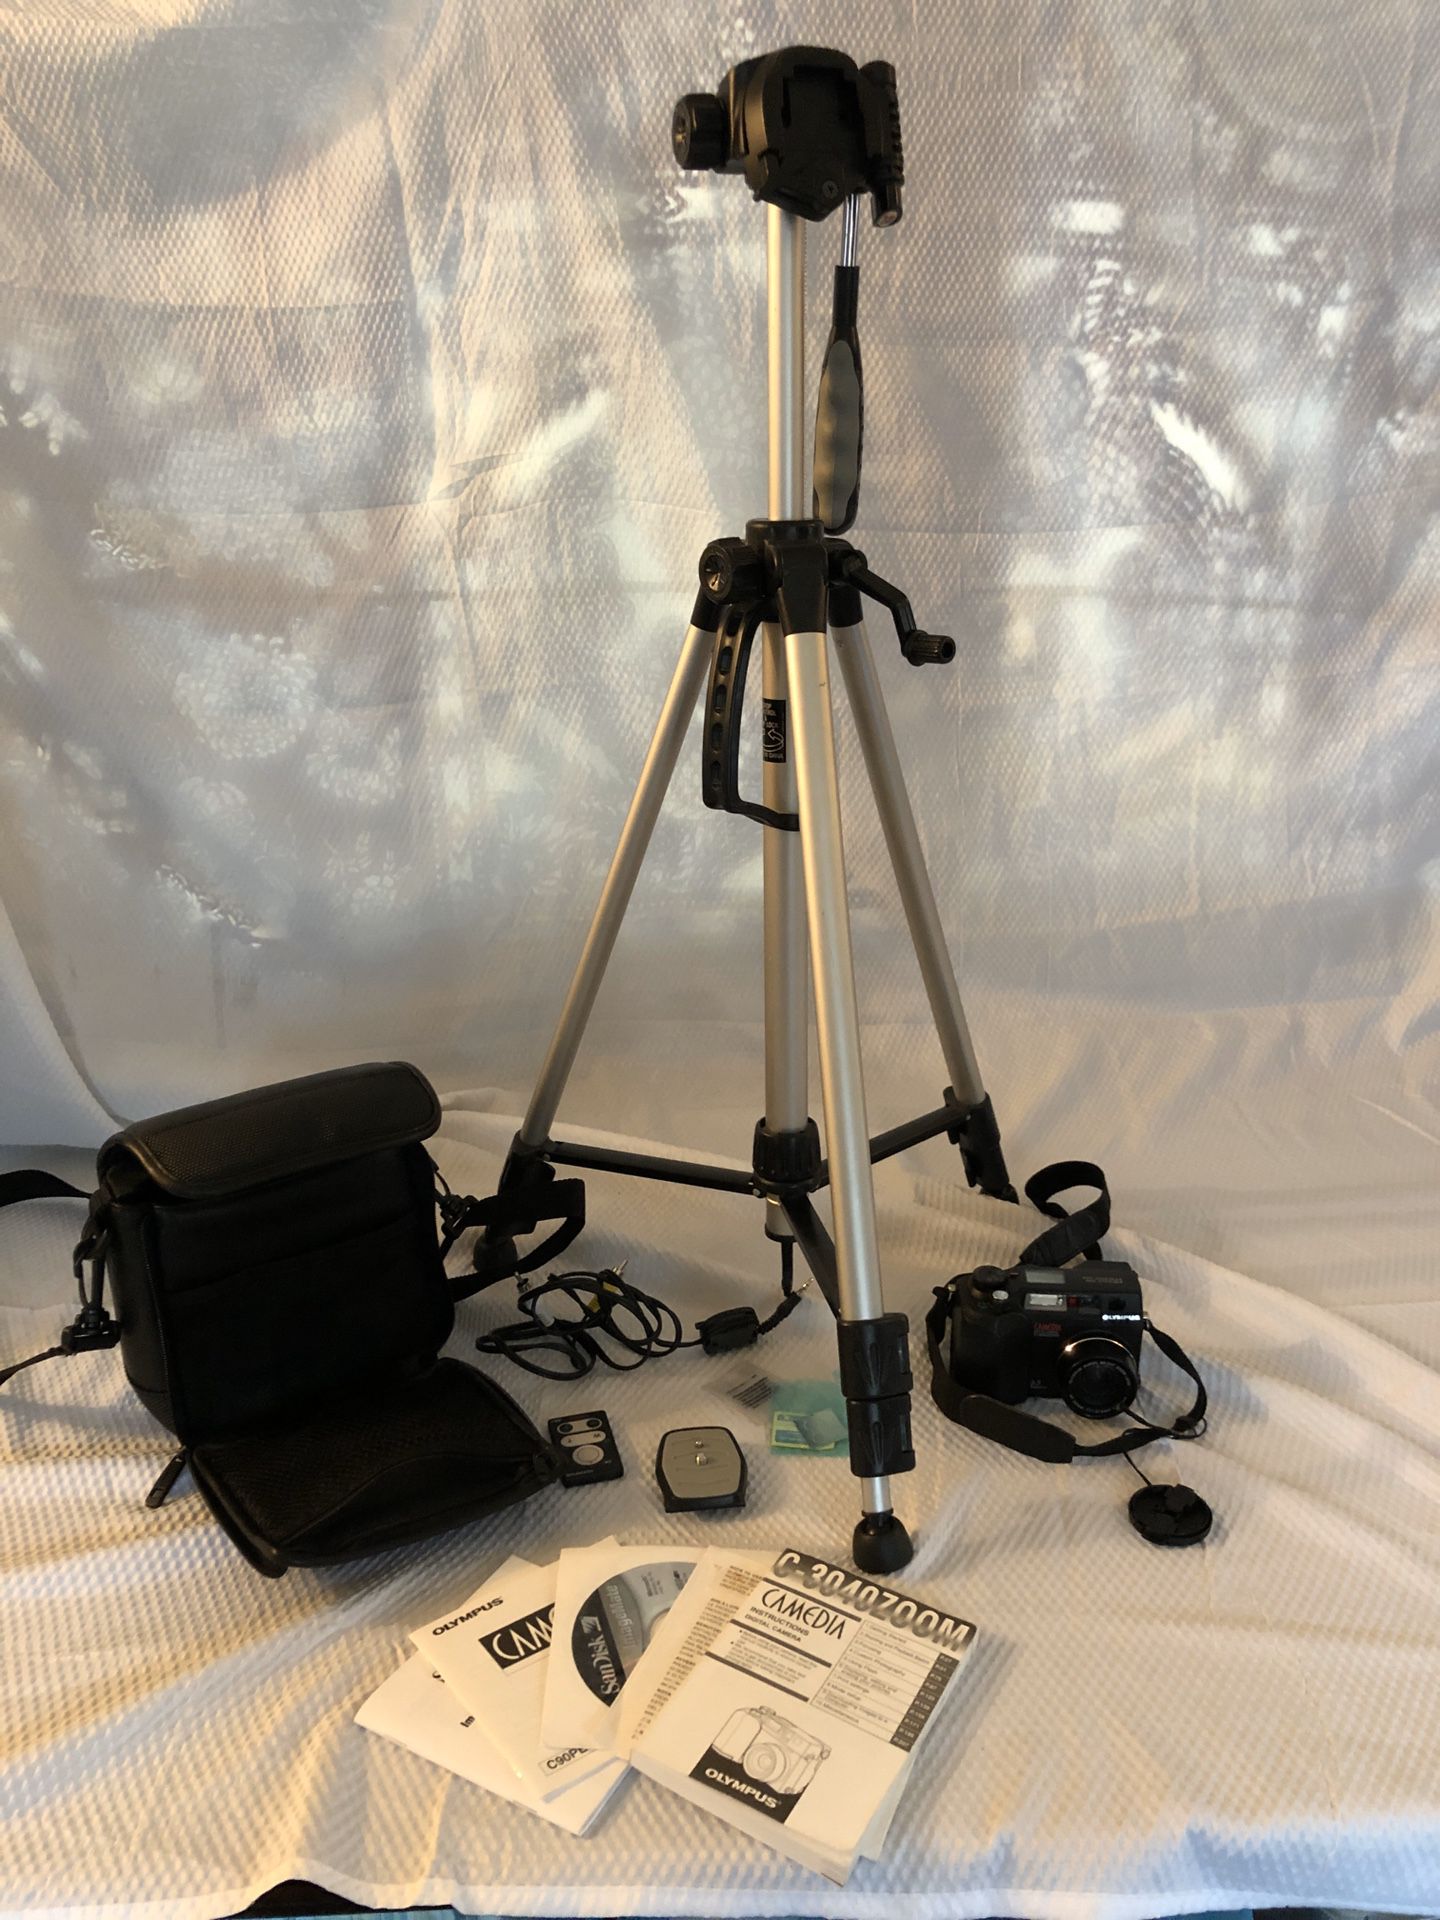 Olympus digital camera, tripod, light stands package